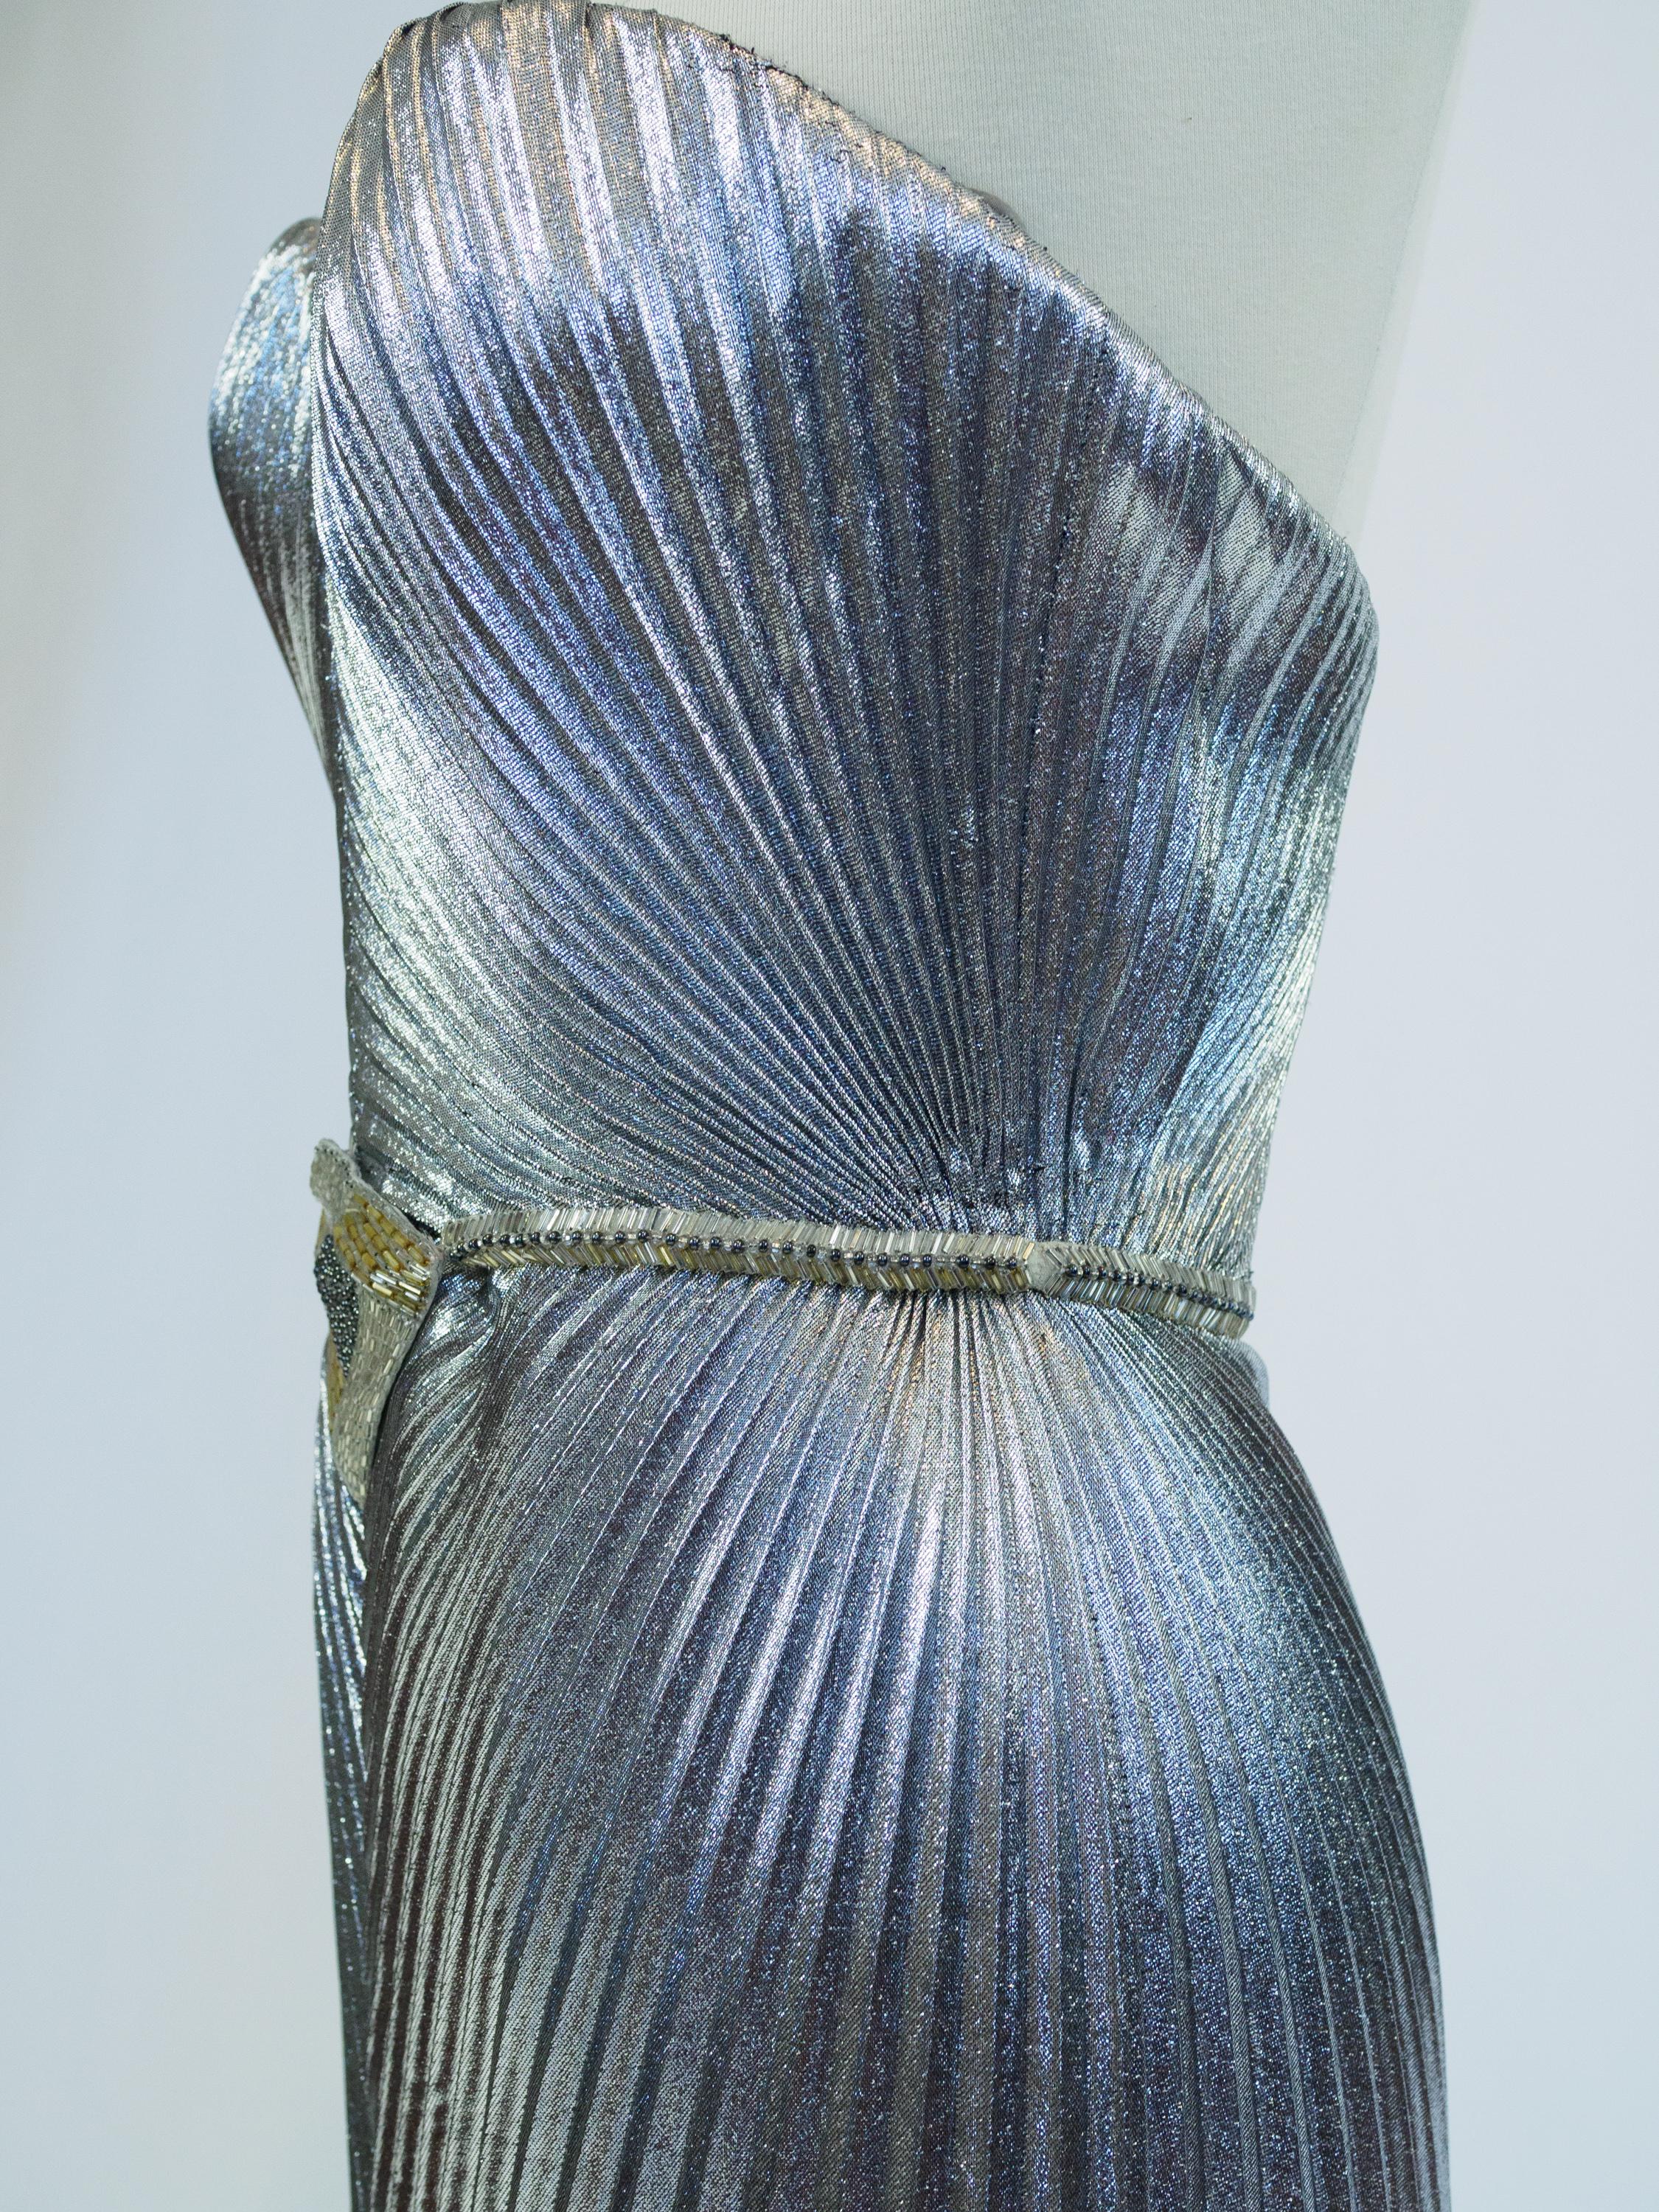 Loris Azzaro Haute Couture evening dress in silver lamé Circa 1980 6